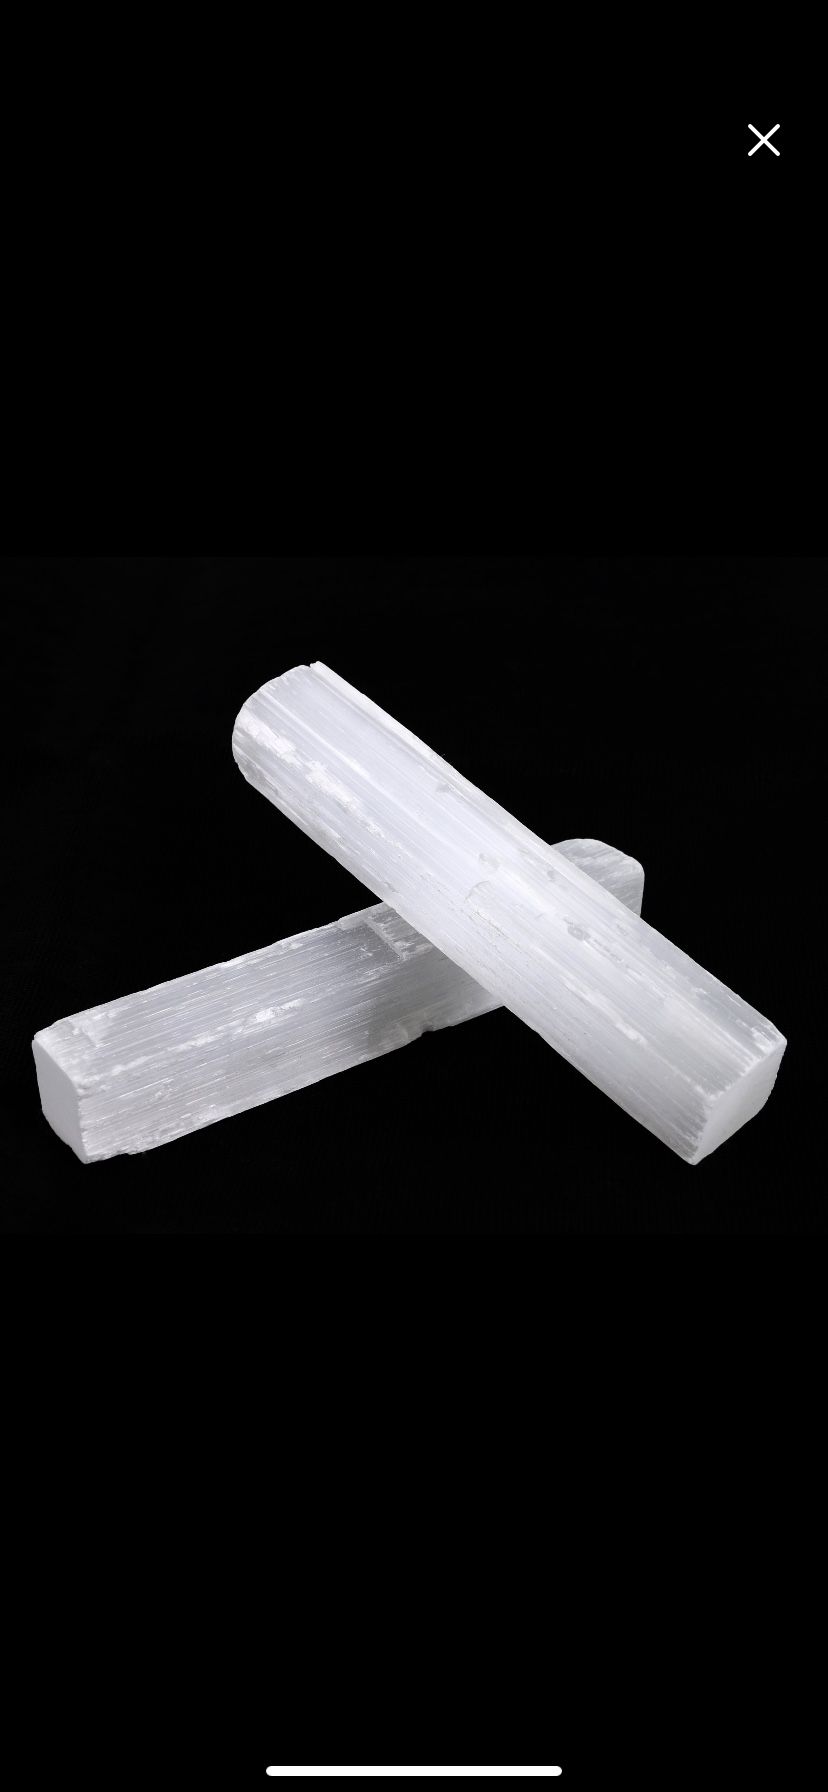 4 Inch Selenite Crystal Wands- Healing, Reiki, Metaphysical Energy